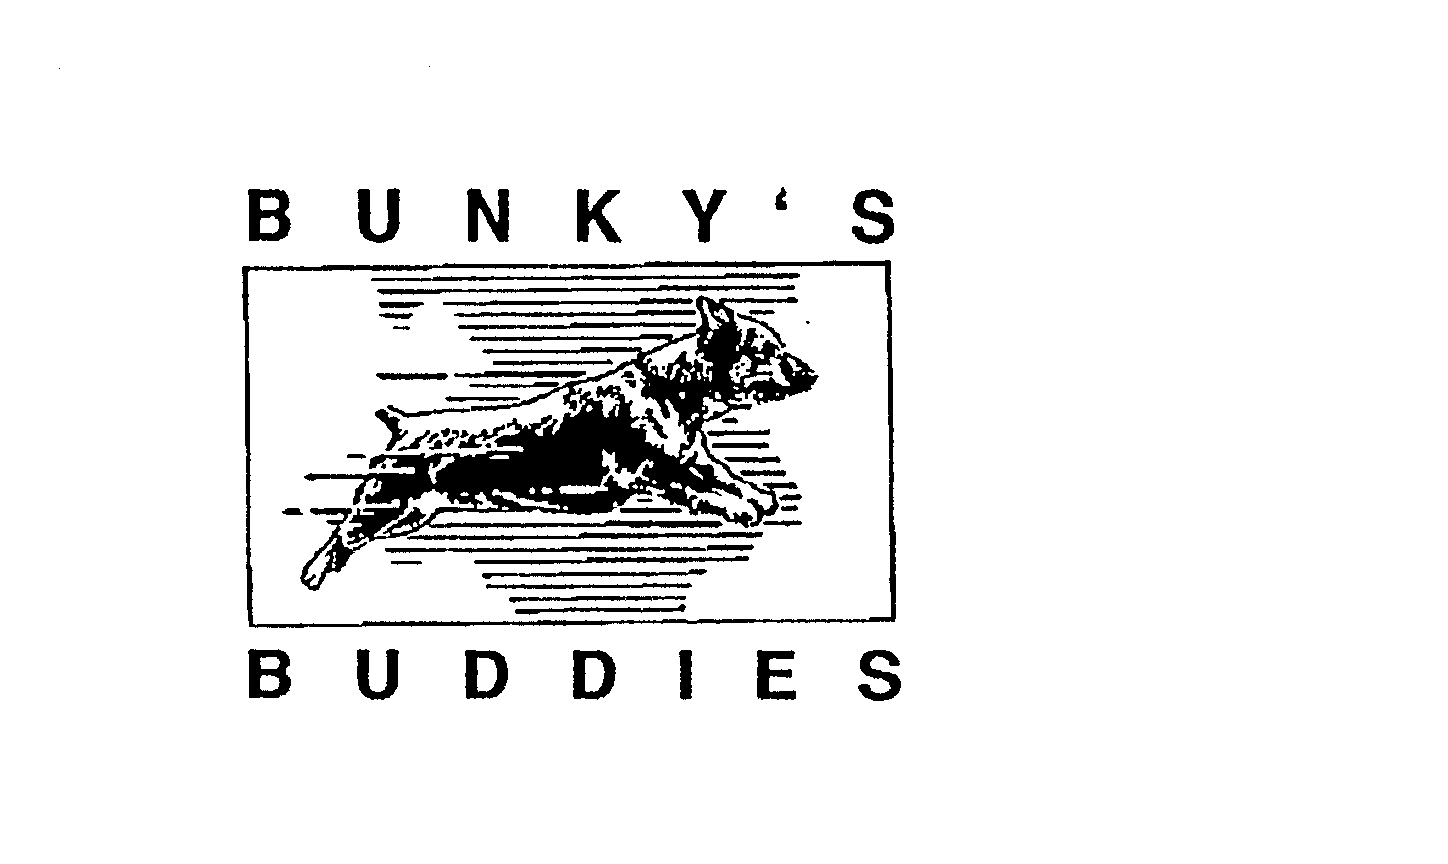  BUNKY'S BUDDIES